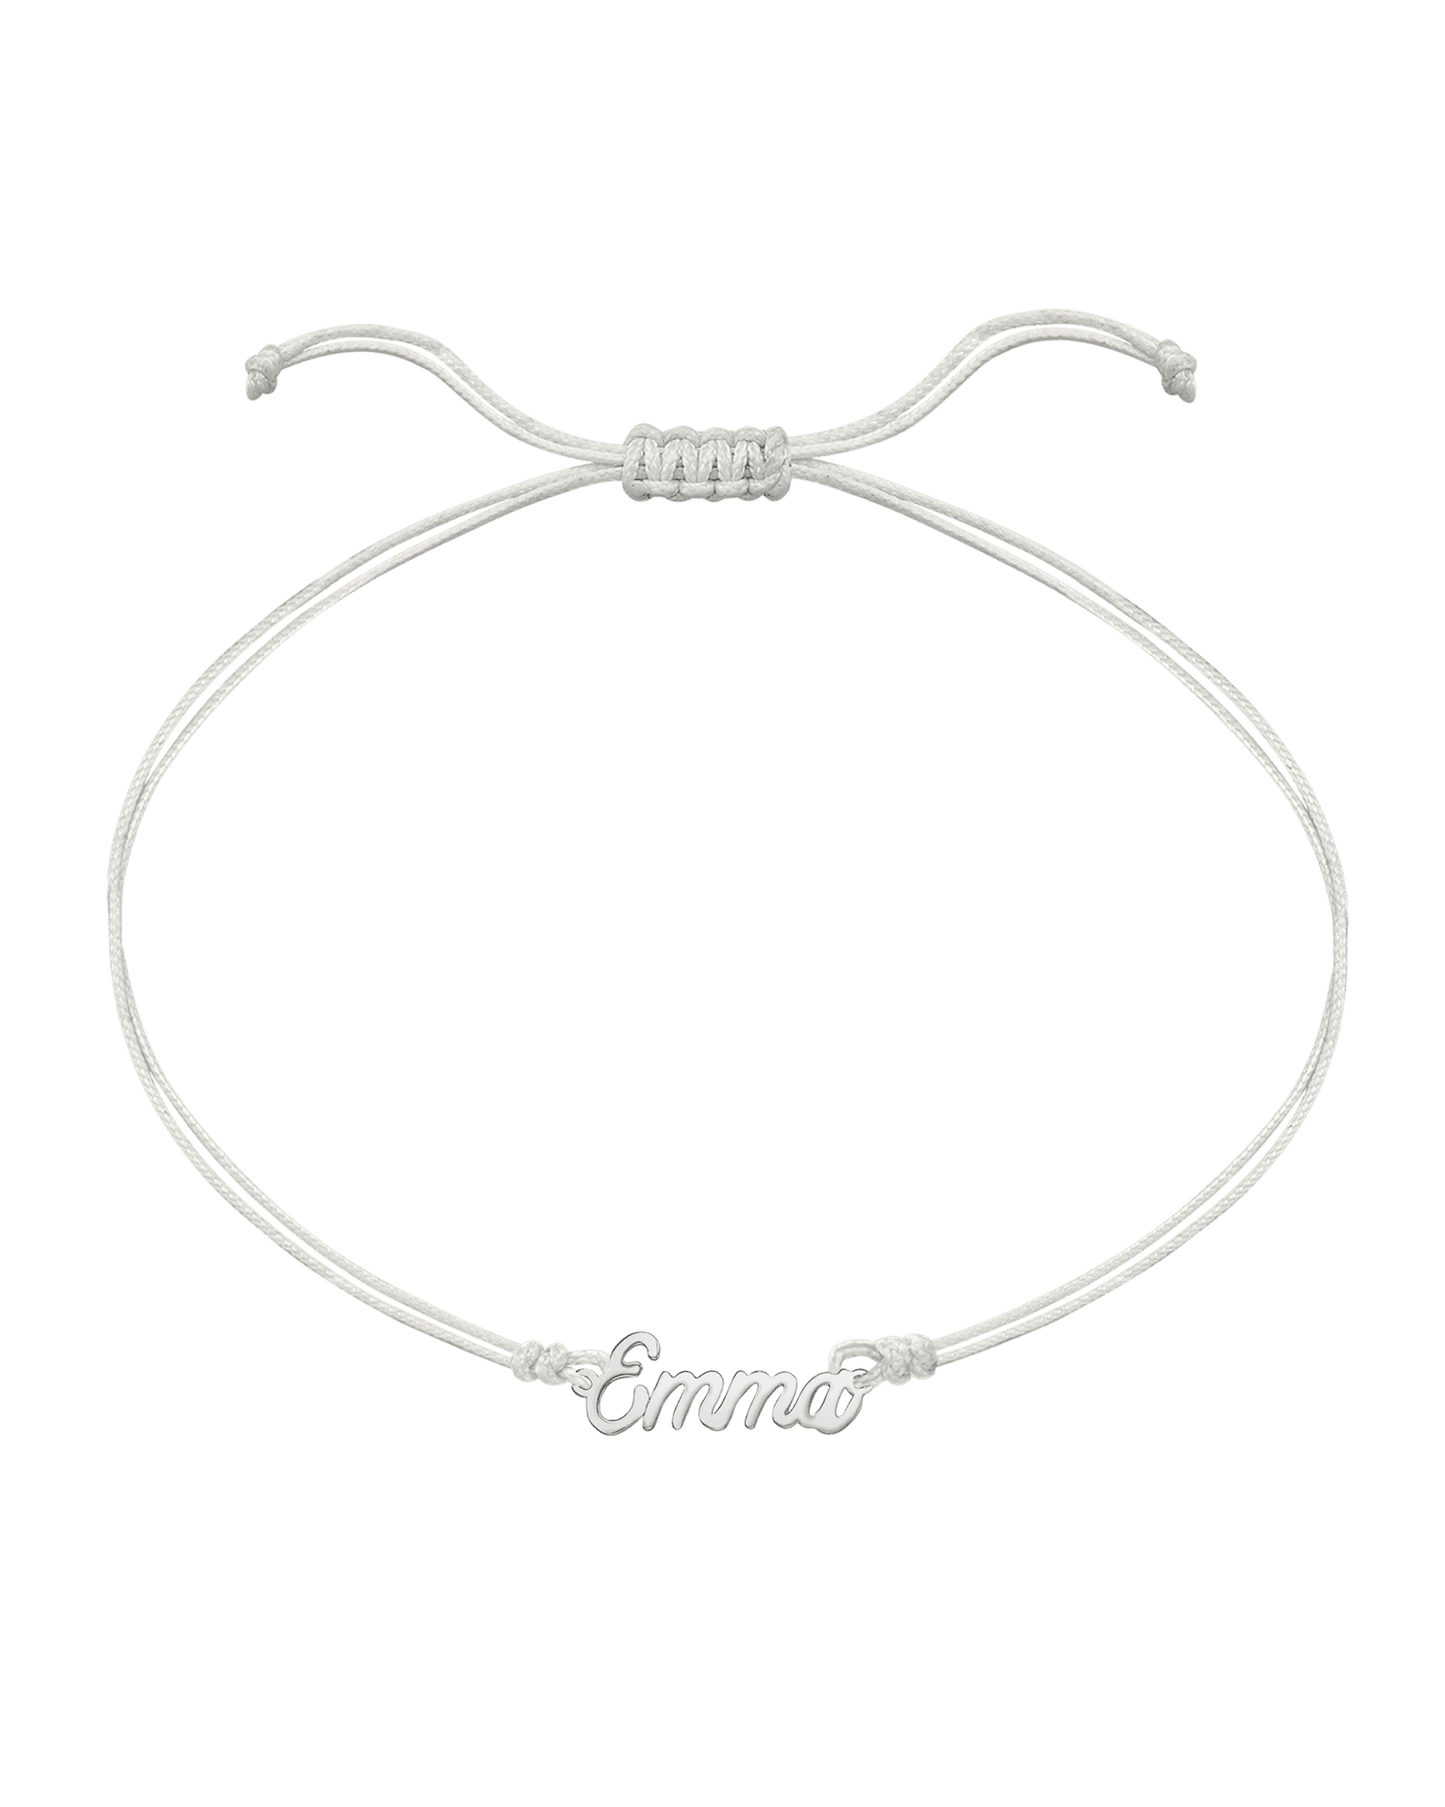 Name Plate String of Love - 14K White Gold Bracelets 14K Solid Gold Pearl 1 